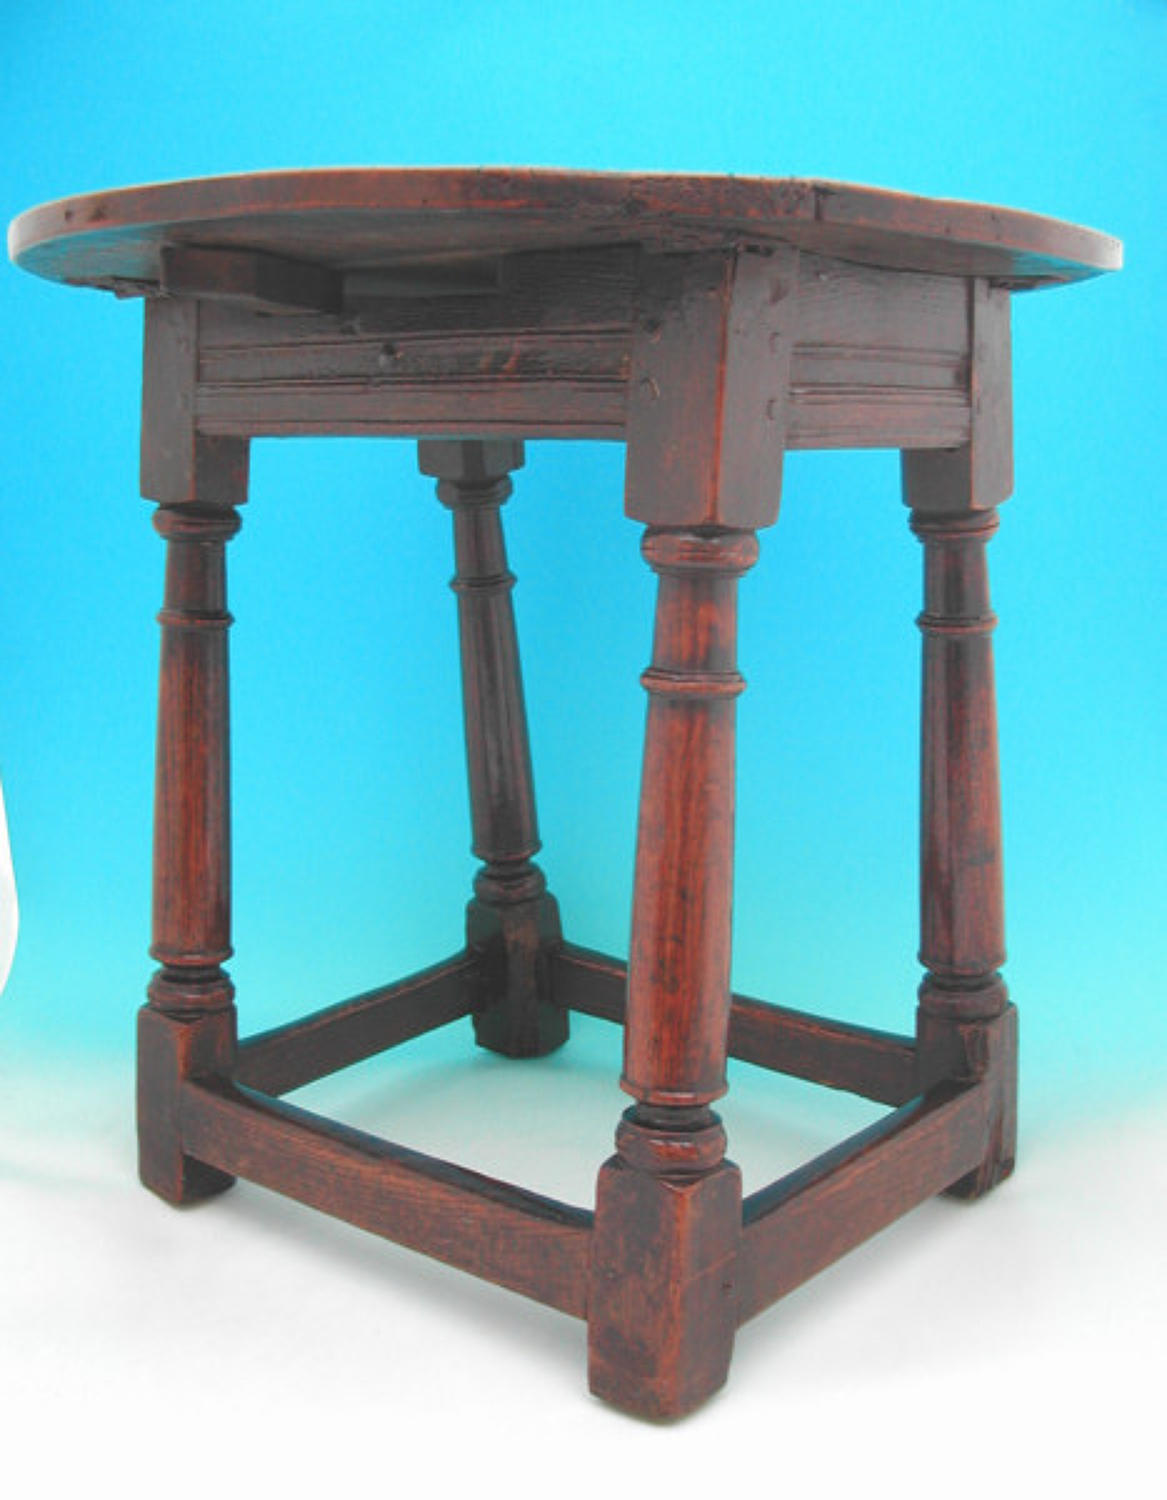 A rare 17thc Oak & Elm Joined Stool Table. English C1601 - C1700